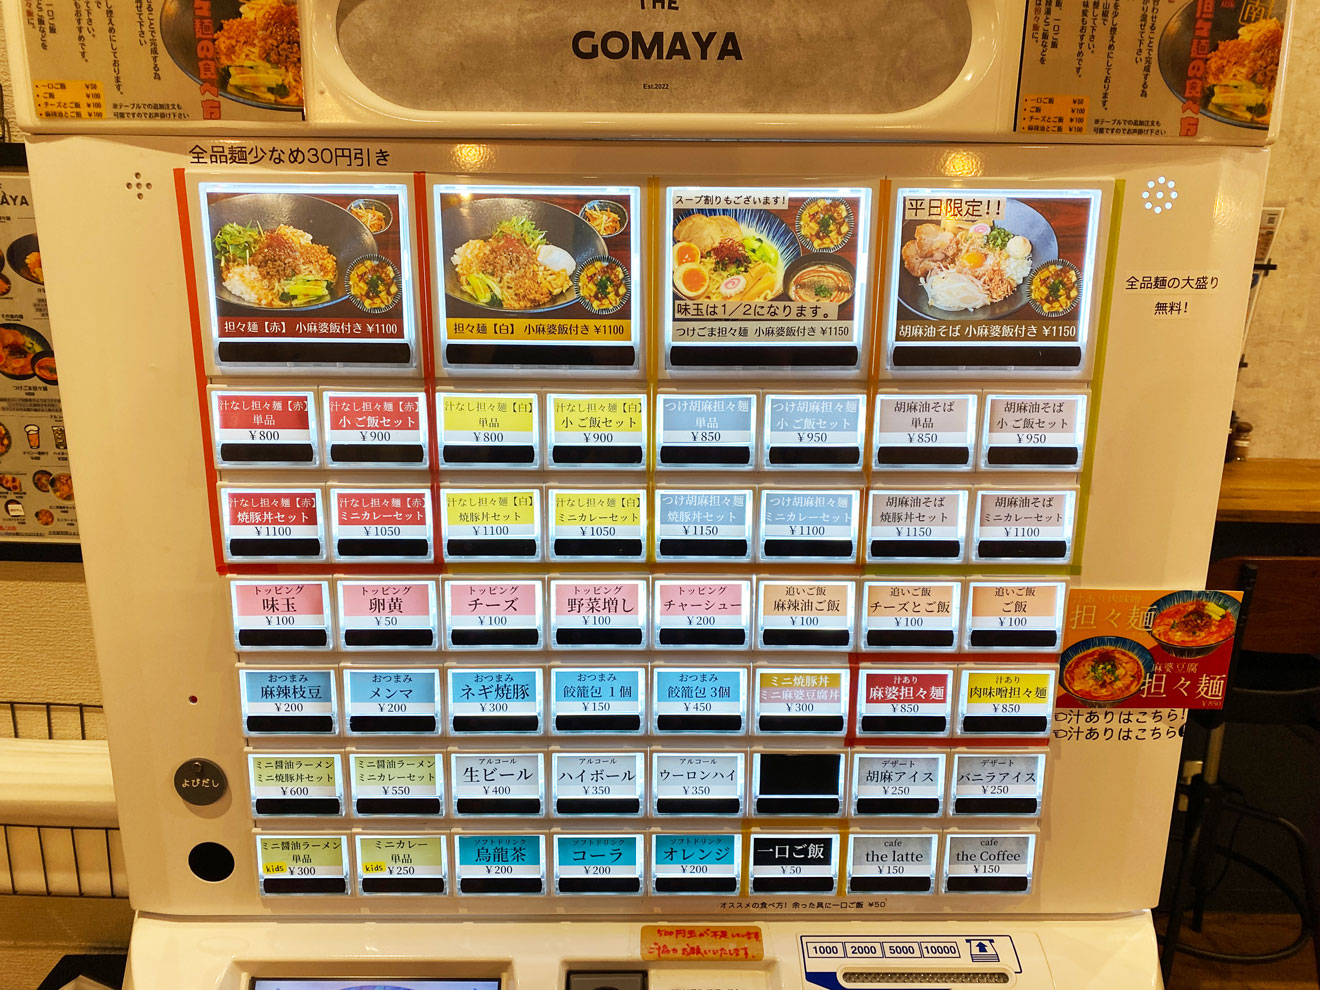 「THE GOMAYA」の食券販売機